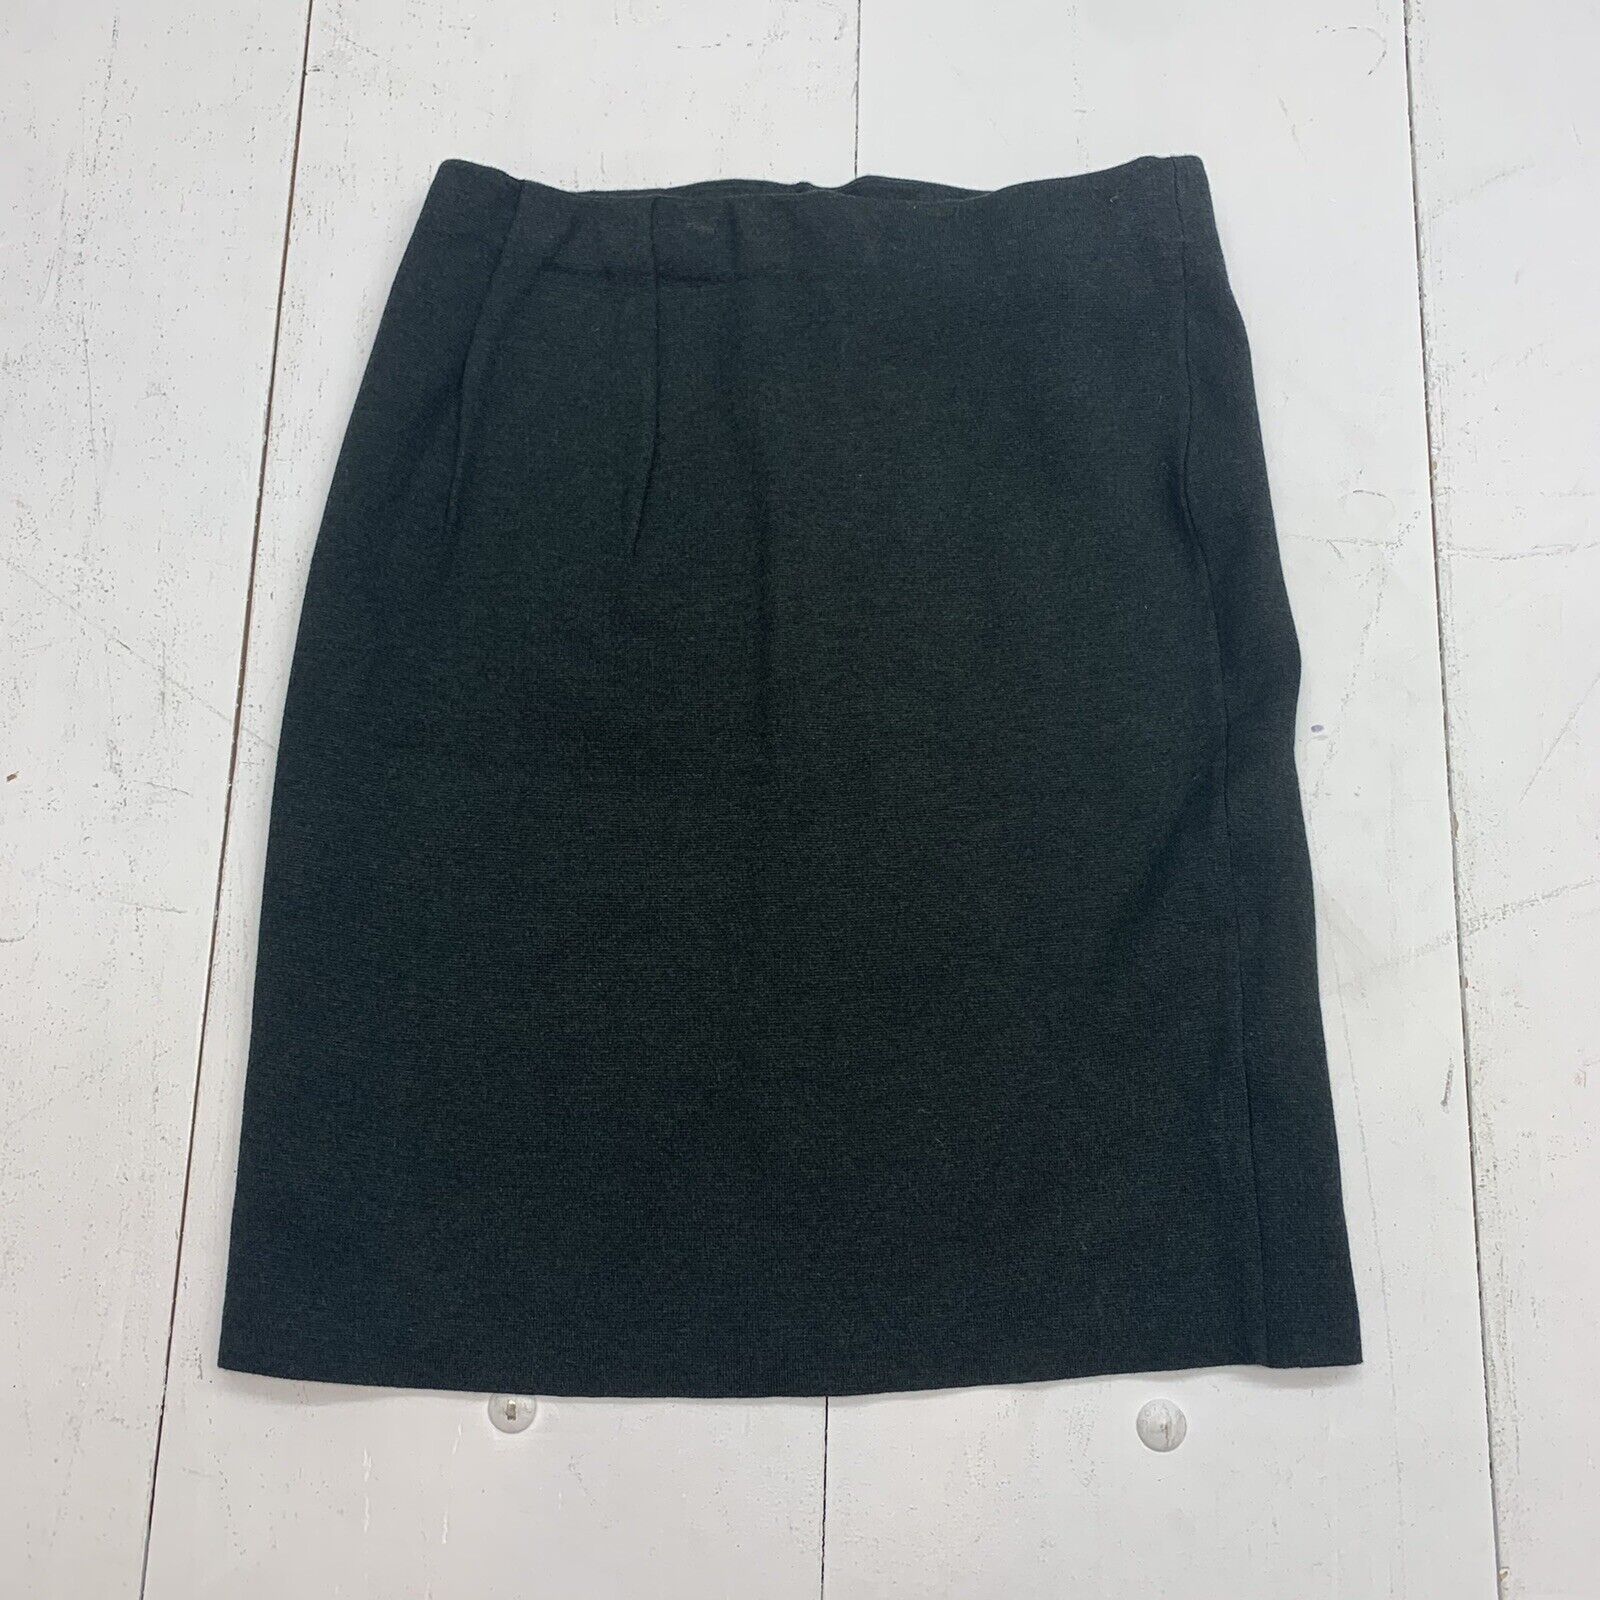 Vittadini Womens Forest Green Skirt Size Large